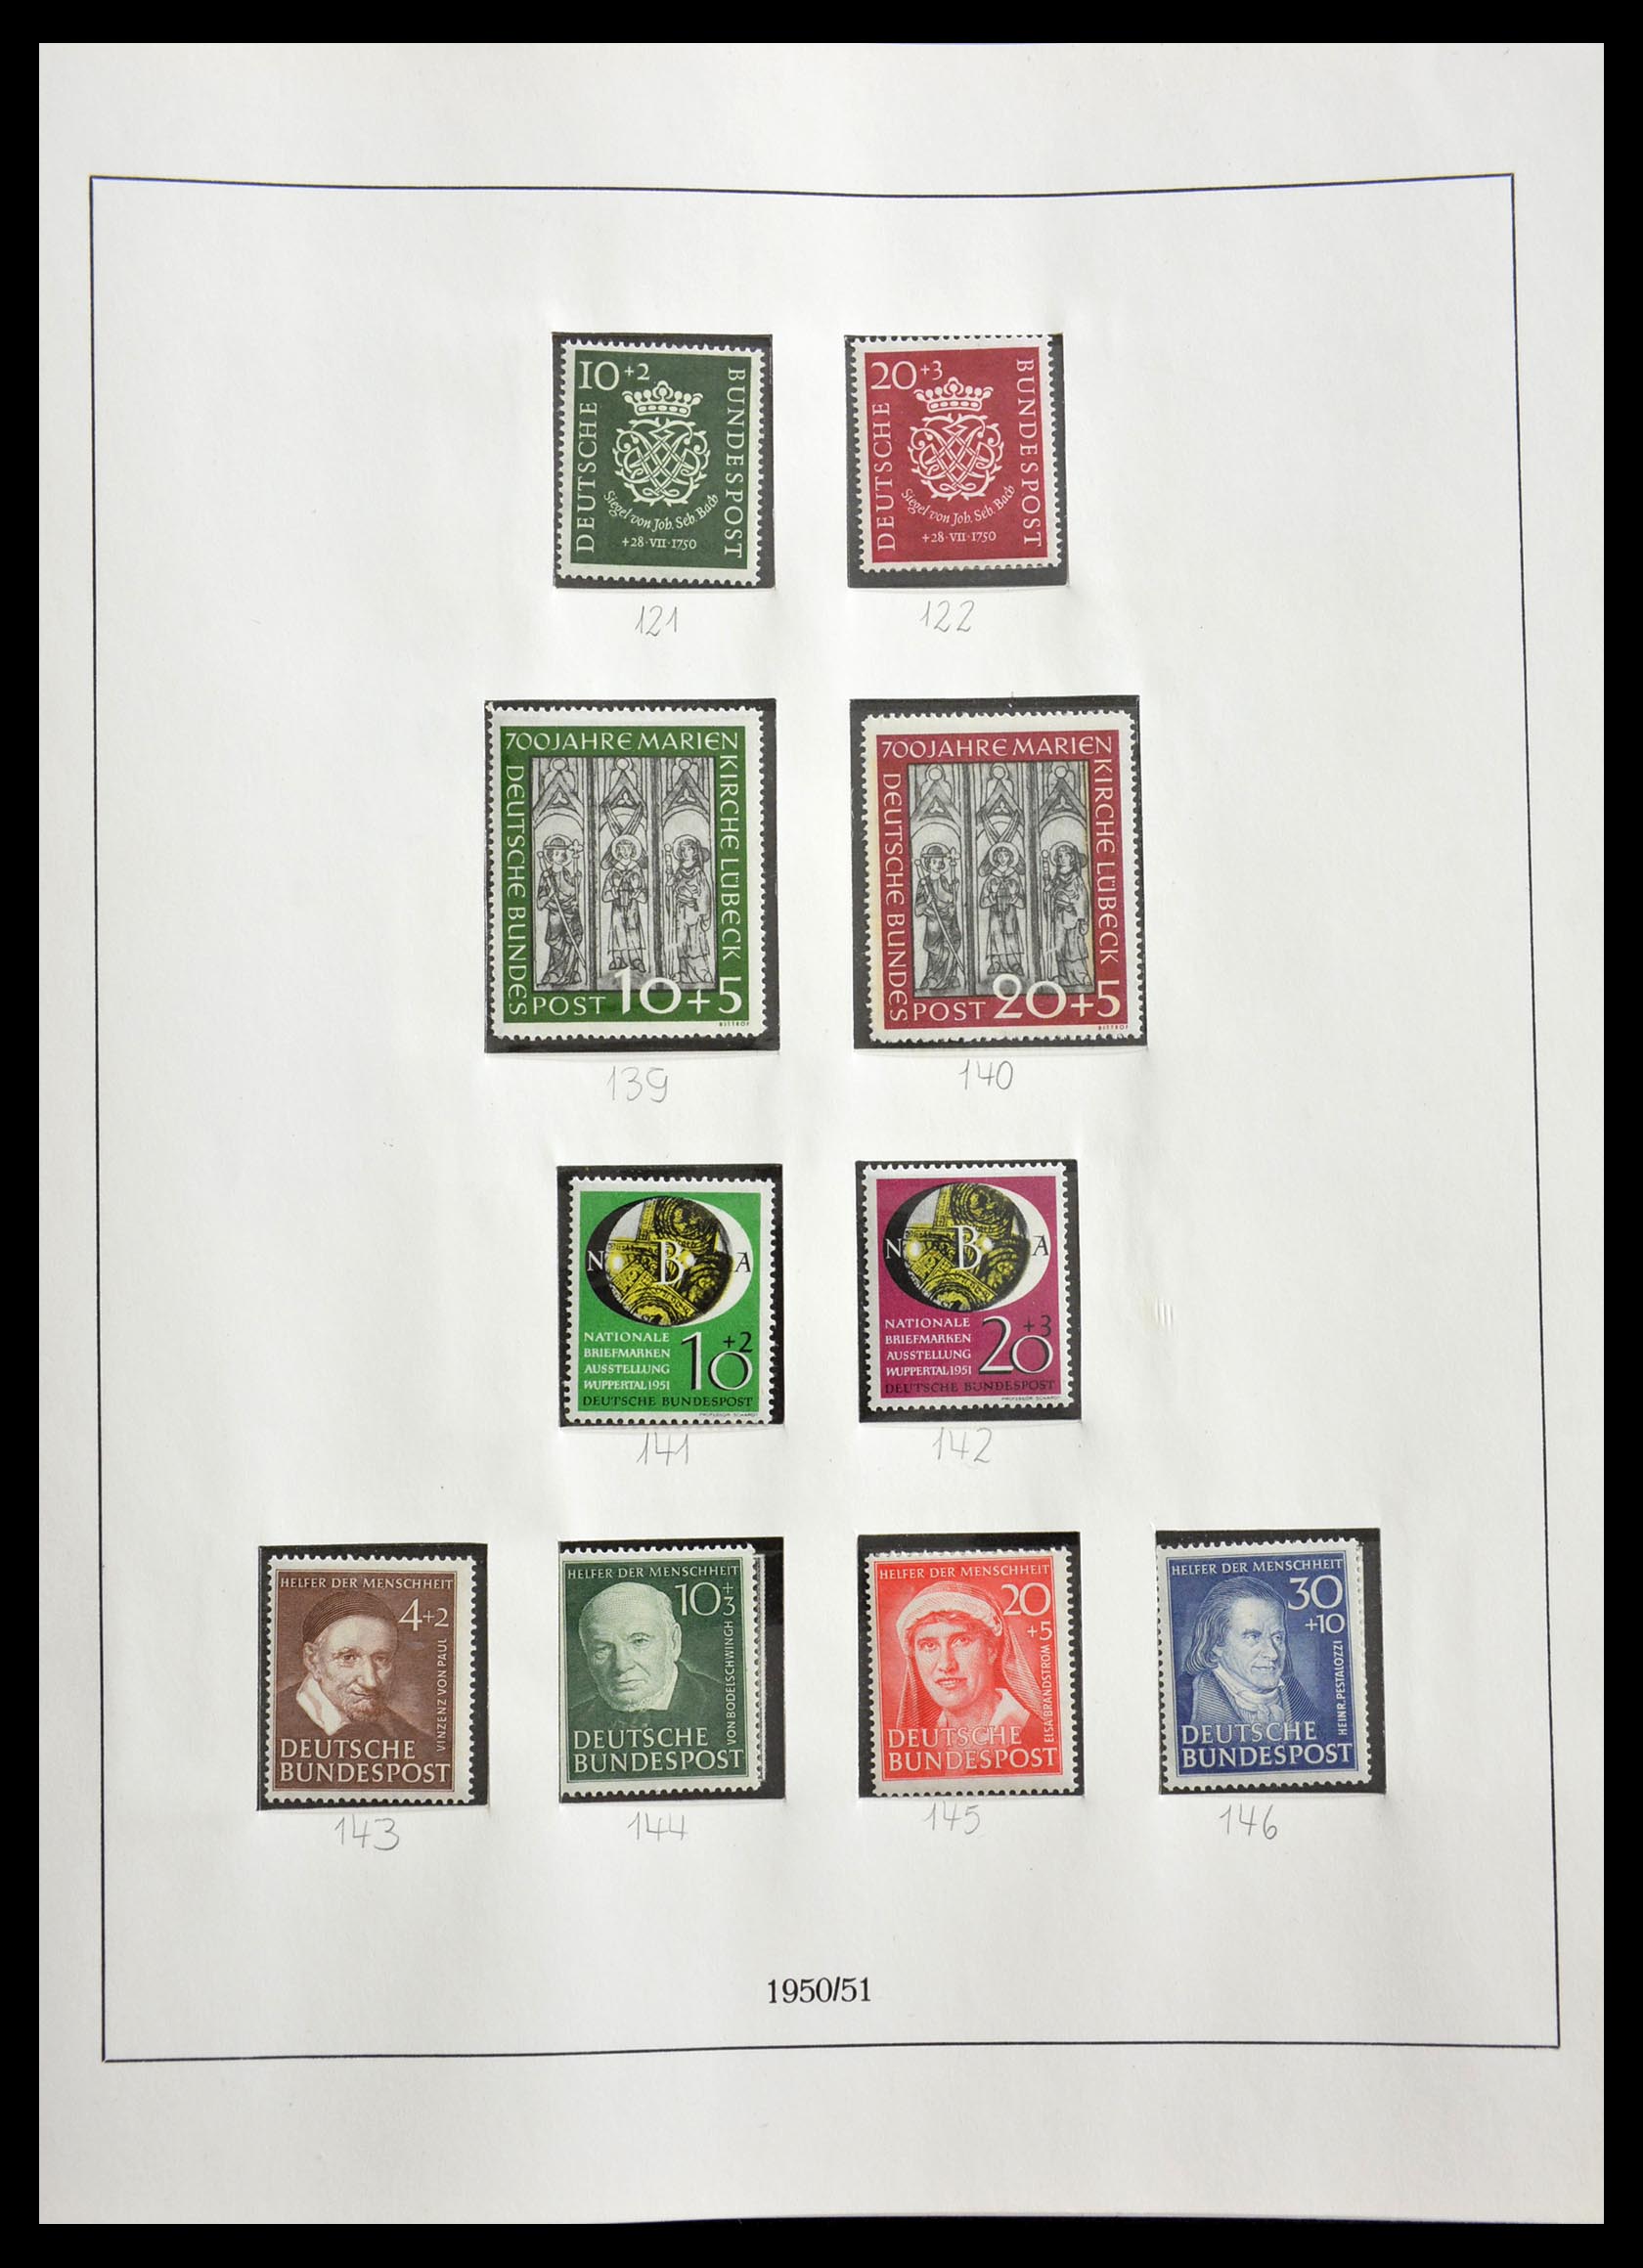 29259 018 - 29259 Bundespost and Zones 1945-1970.